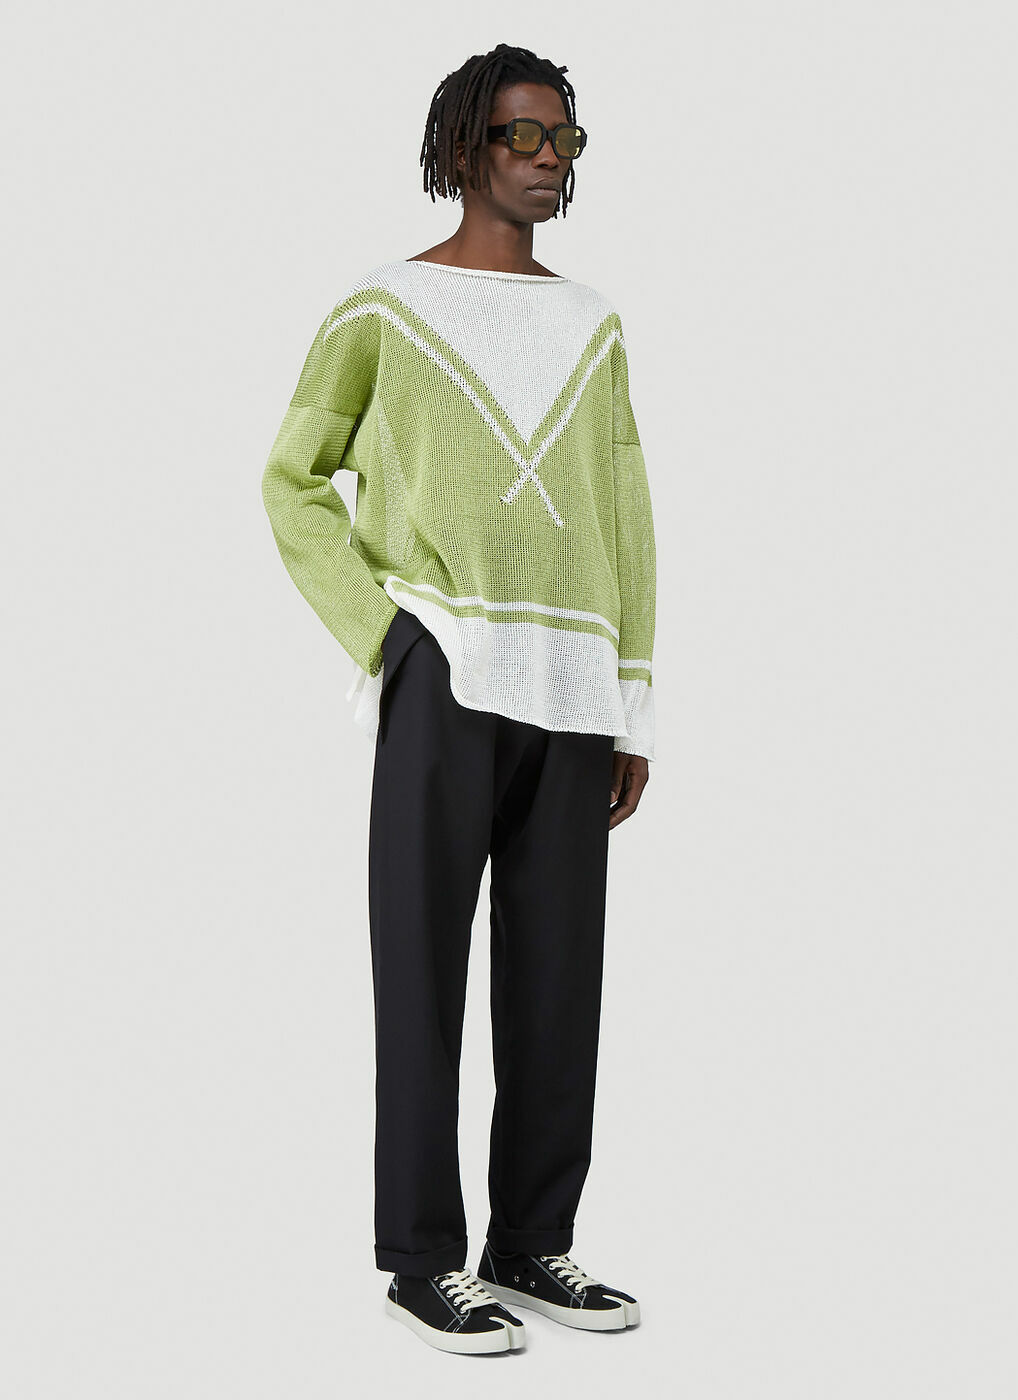 Chevron Knitted Sweater in Green Sulvam